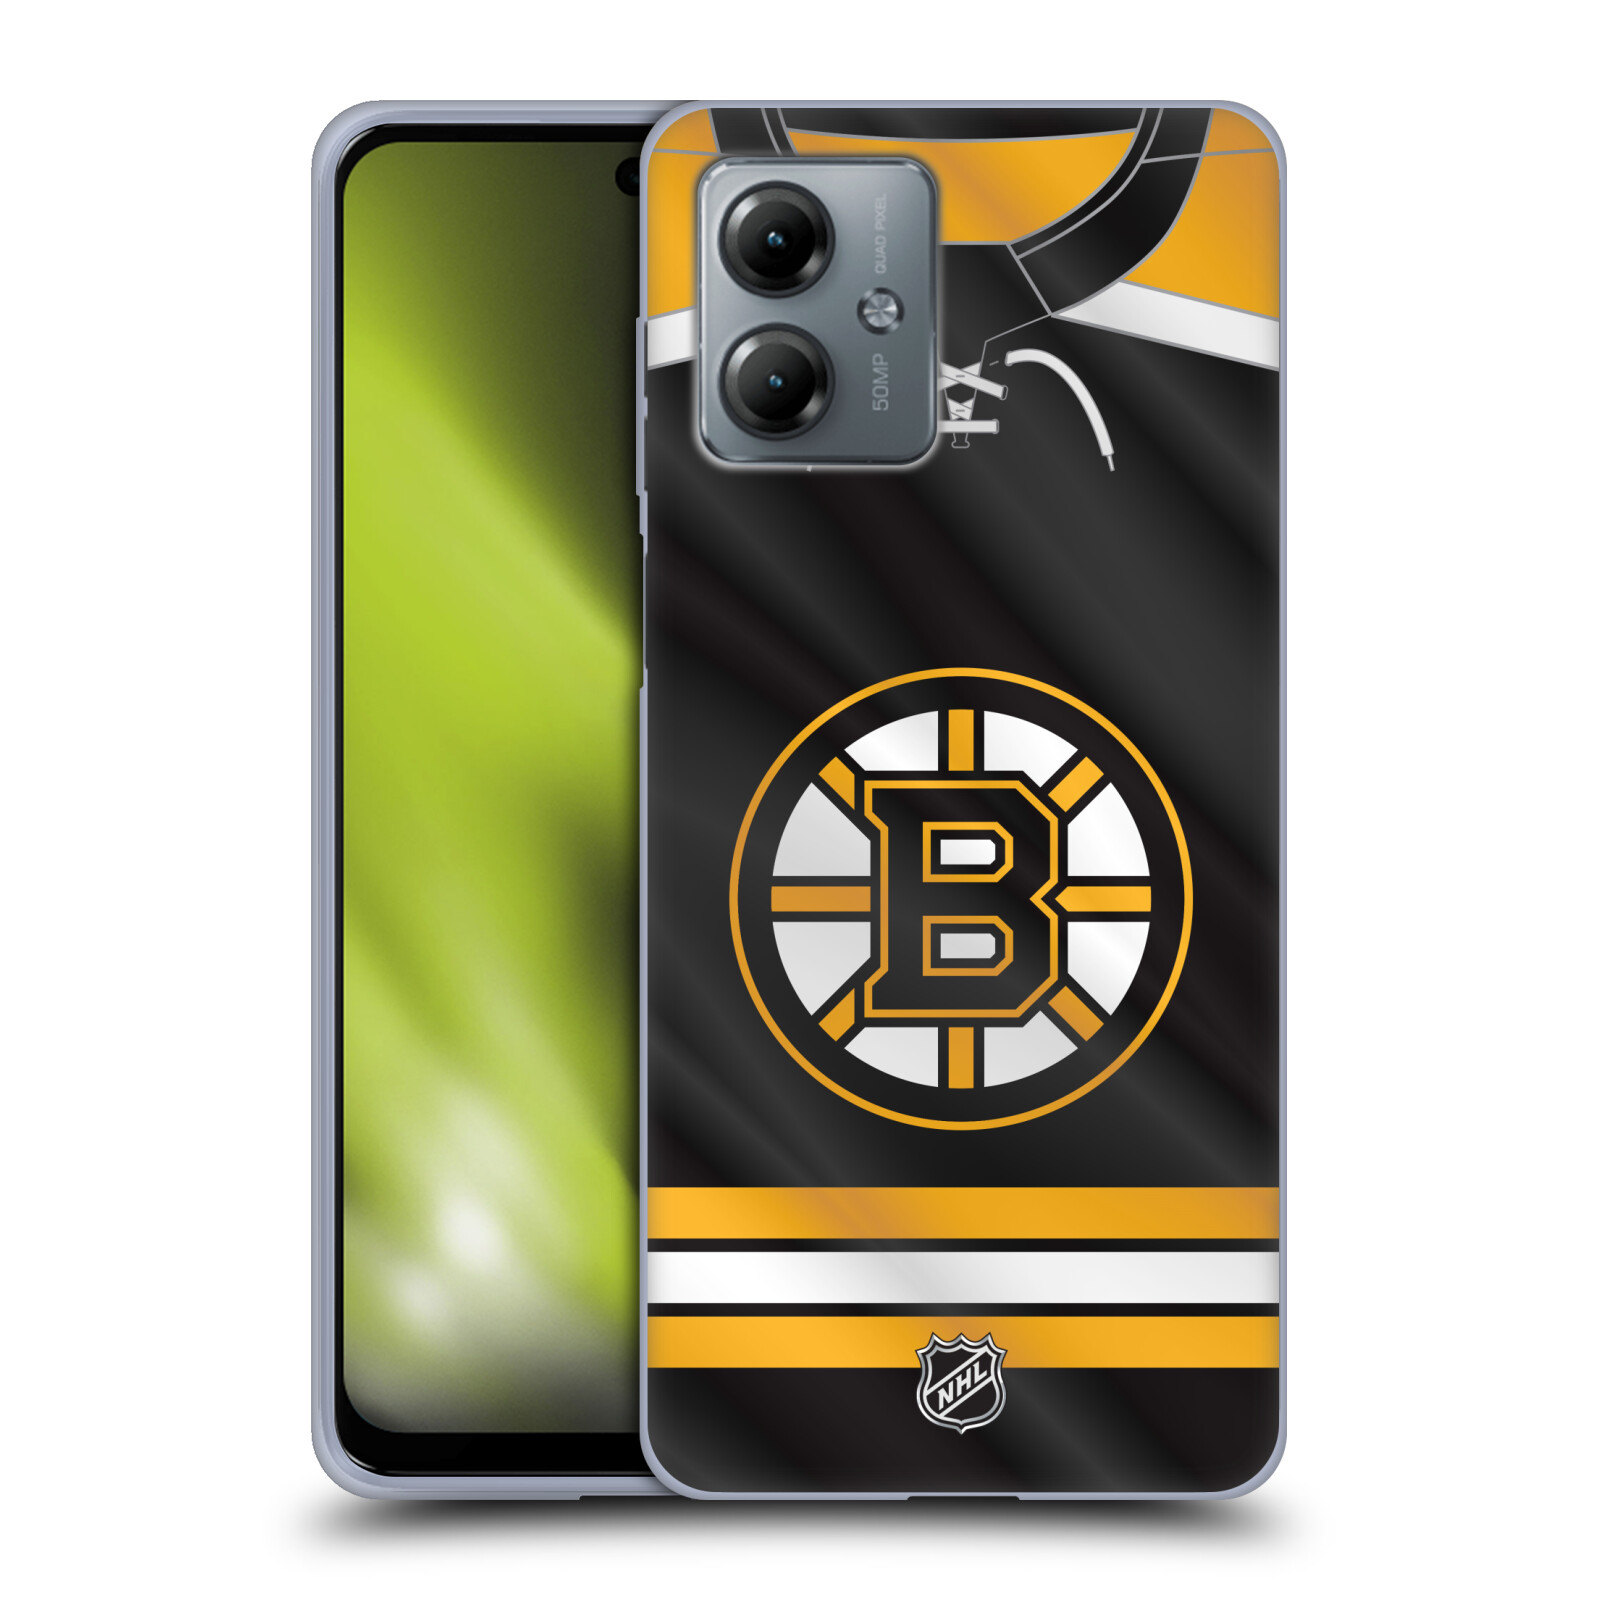 Silikonové pouzdro na mobil Motorola Moto G14 - NHL - Dres Boston Bruins (Silikonový kryt, obal, pouzdro na mobilní telefon Motorola Moto G14 s licencovaným motivem NHL - Dres Boston Bruins)